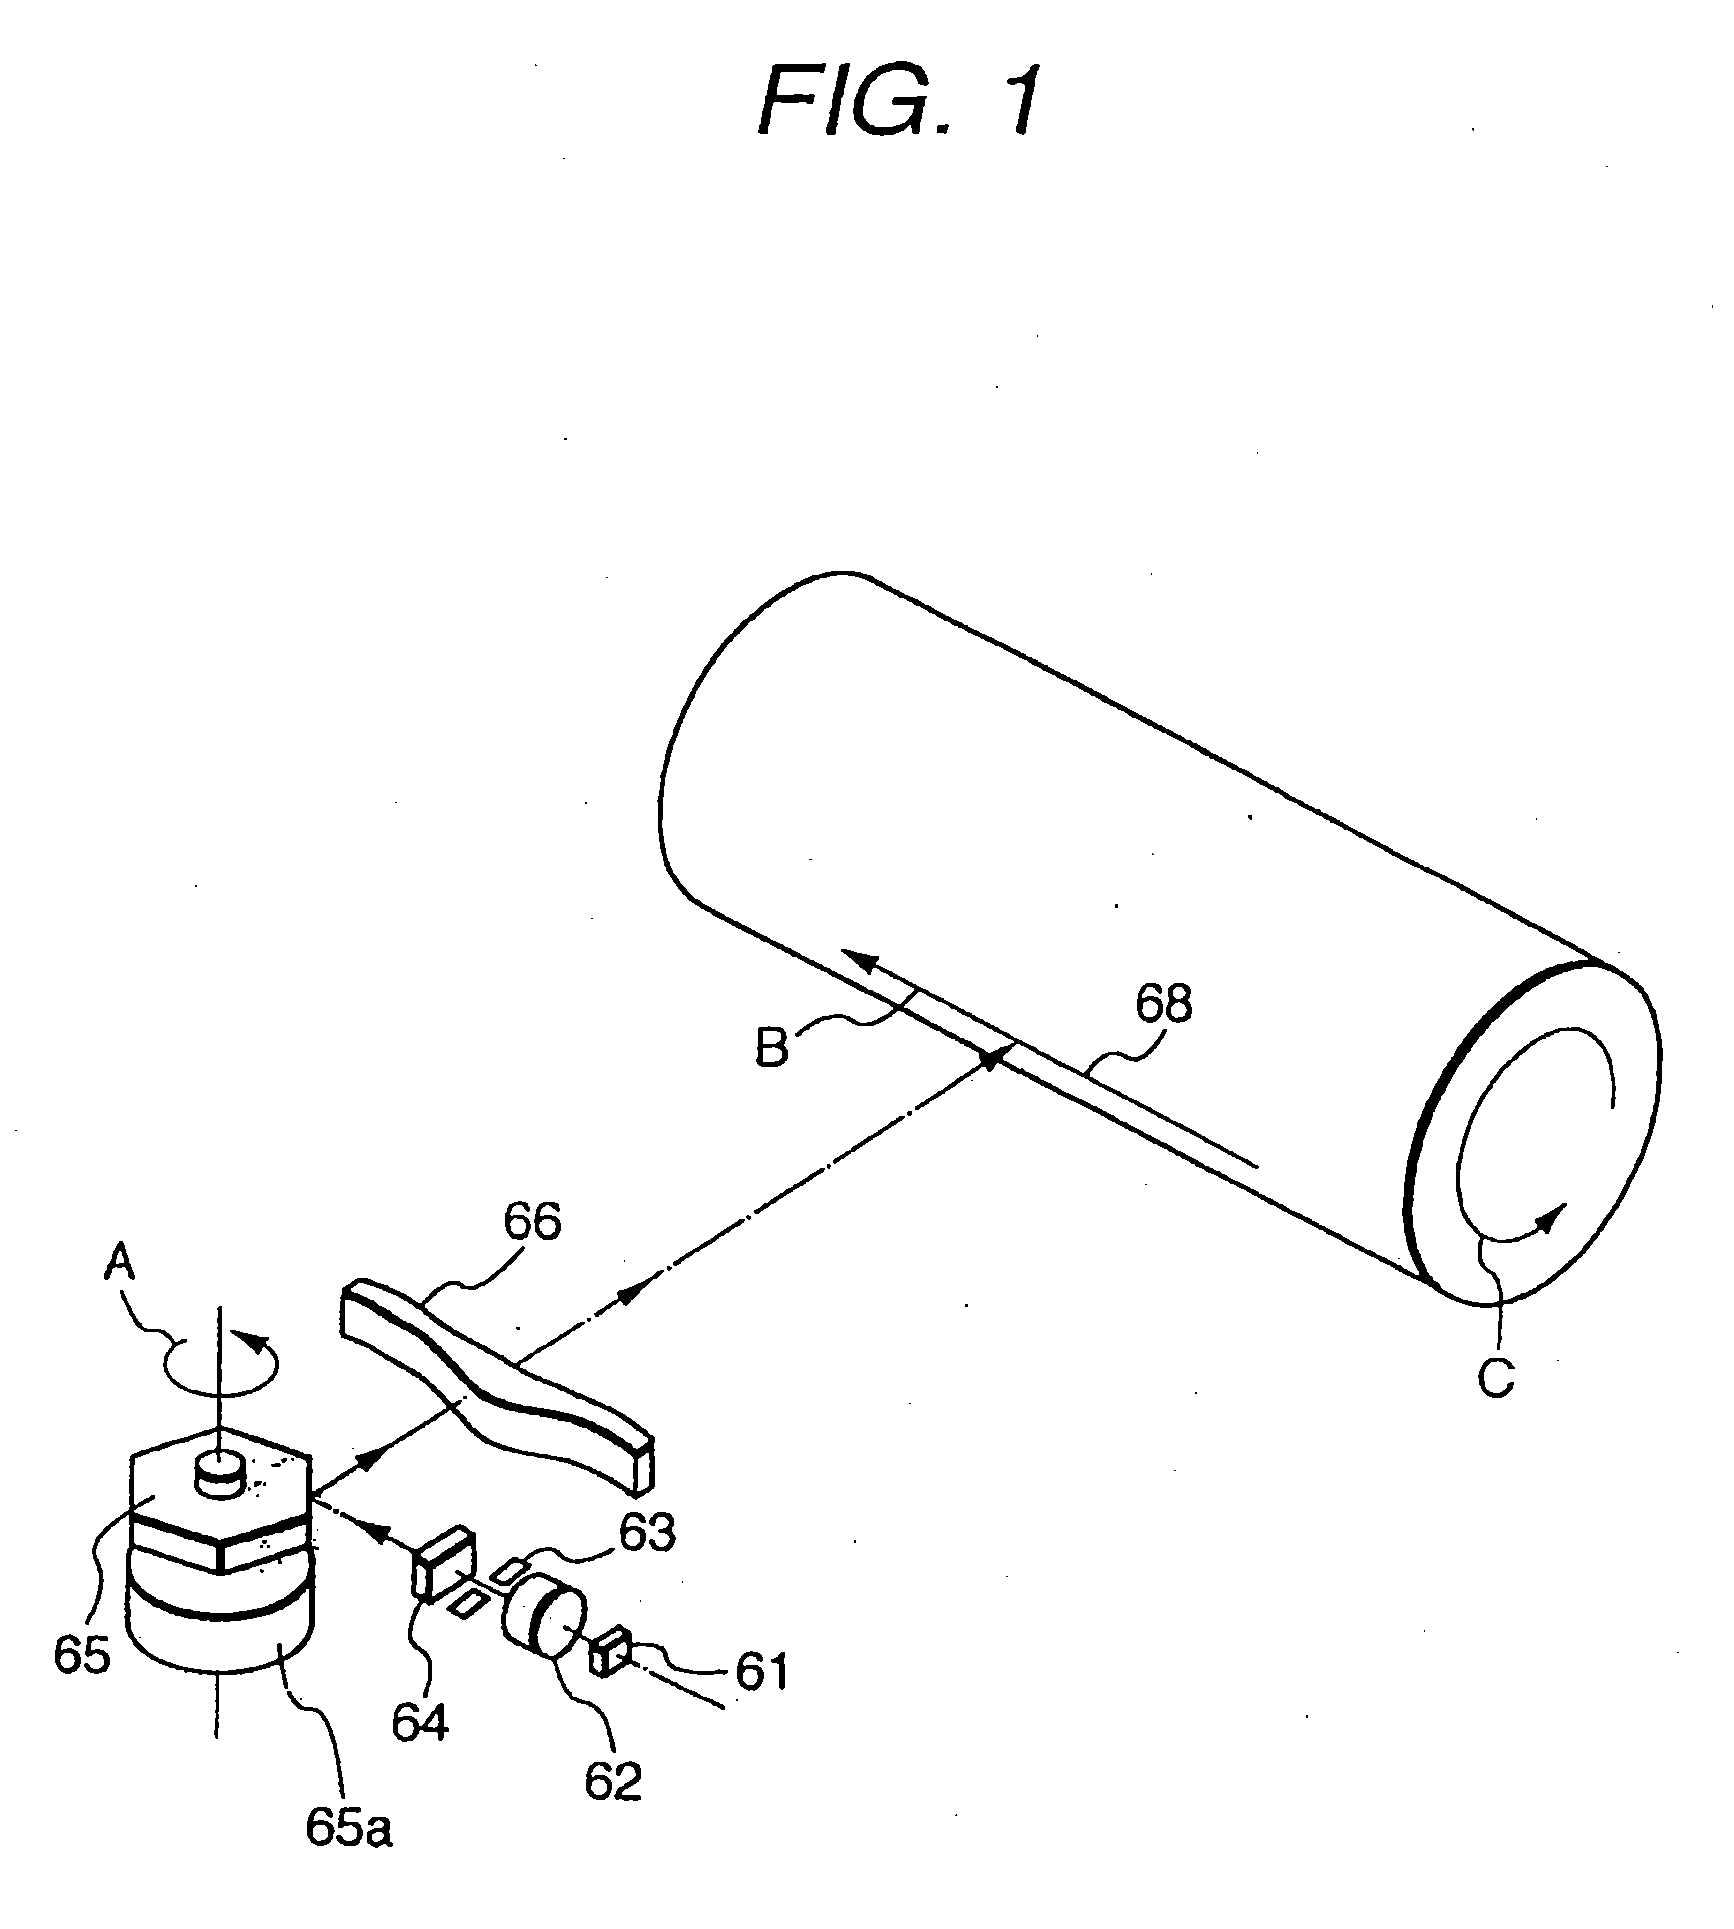 Scanning optical apparatus